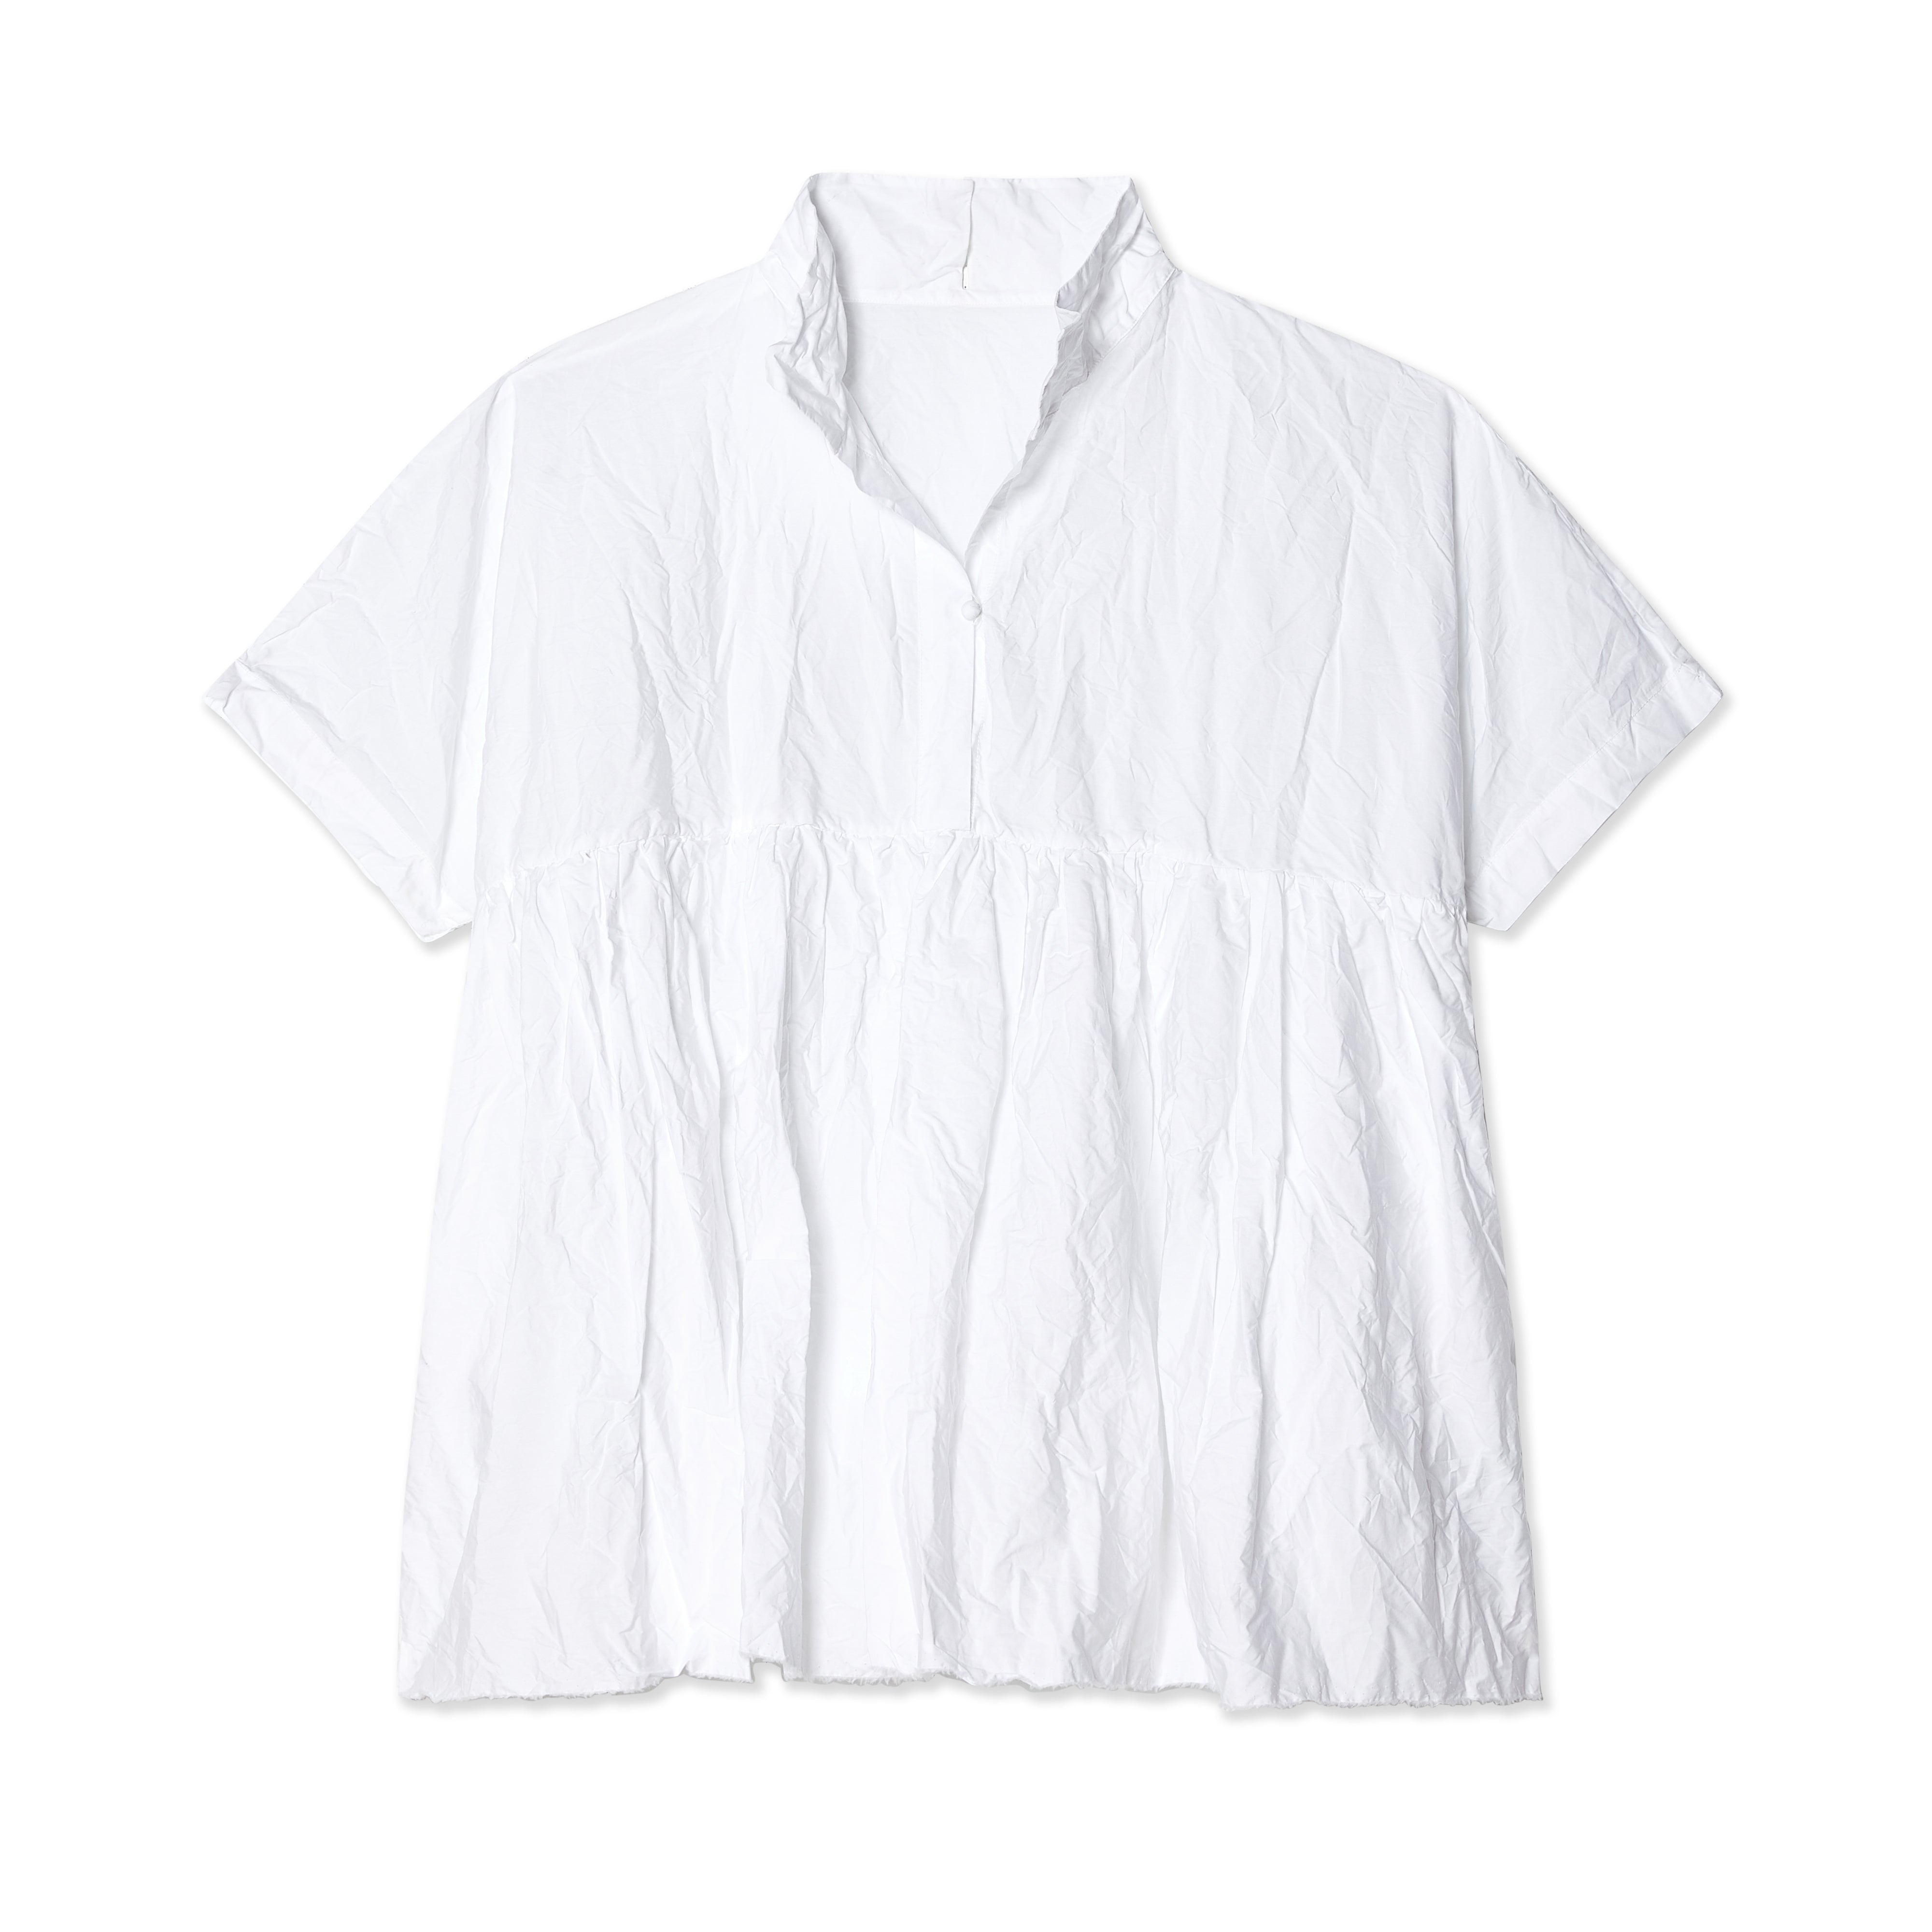 Daniela Gregis - Women's Aria Lavata Shirt - (Optical White)